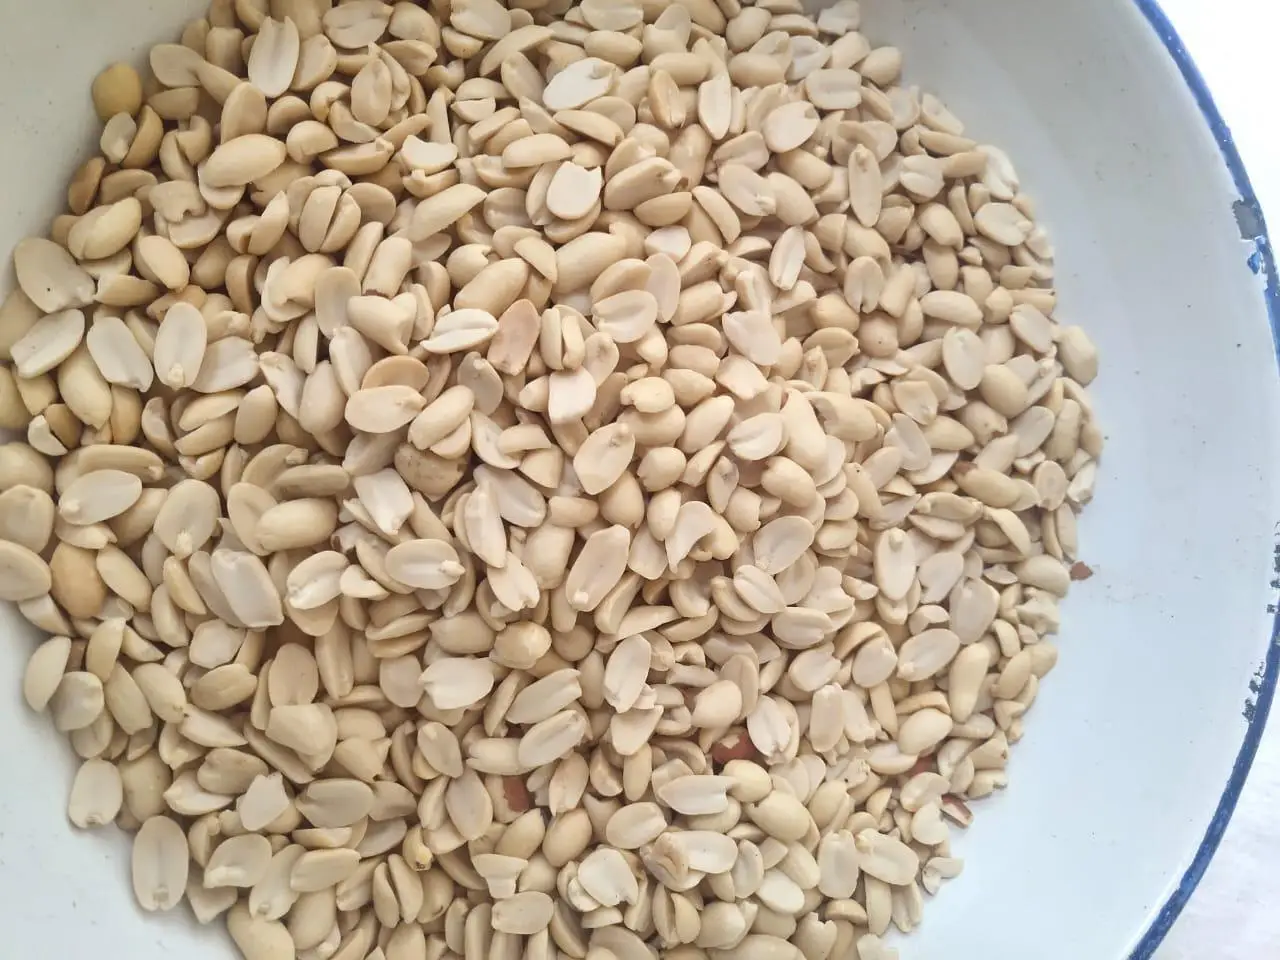 
Peanut split raw or blanched peanut split india origin vacuum packaging best quality 